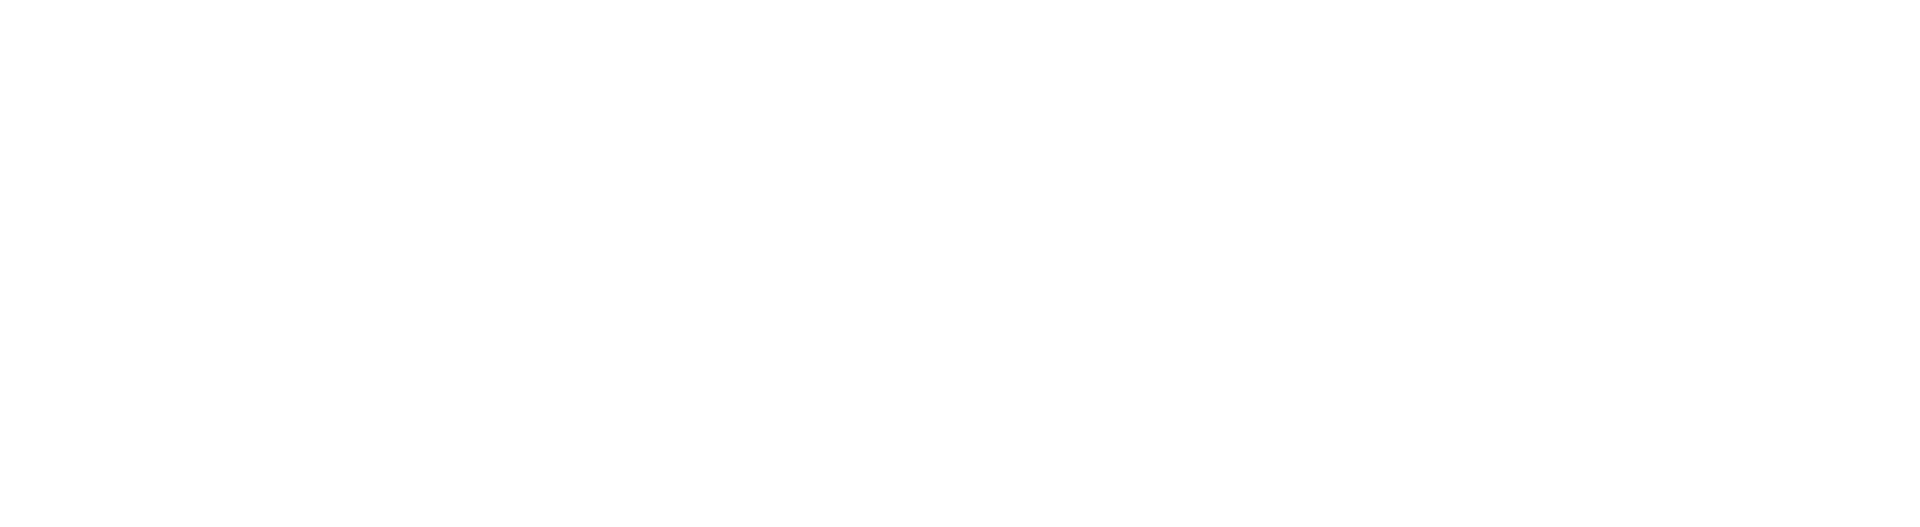 dance dynamics logo